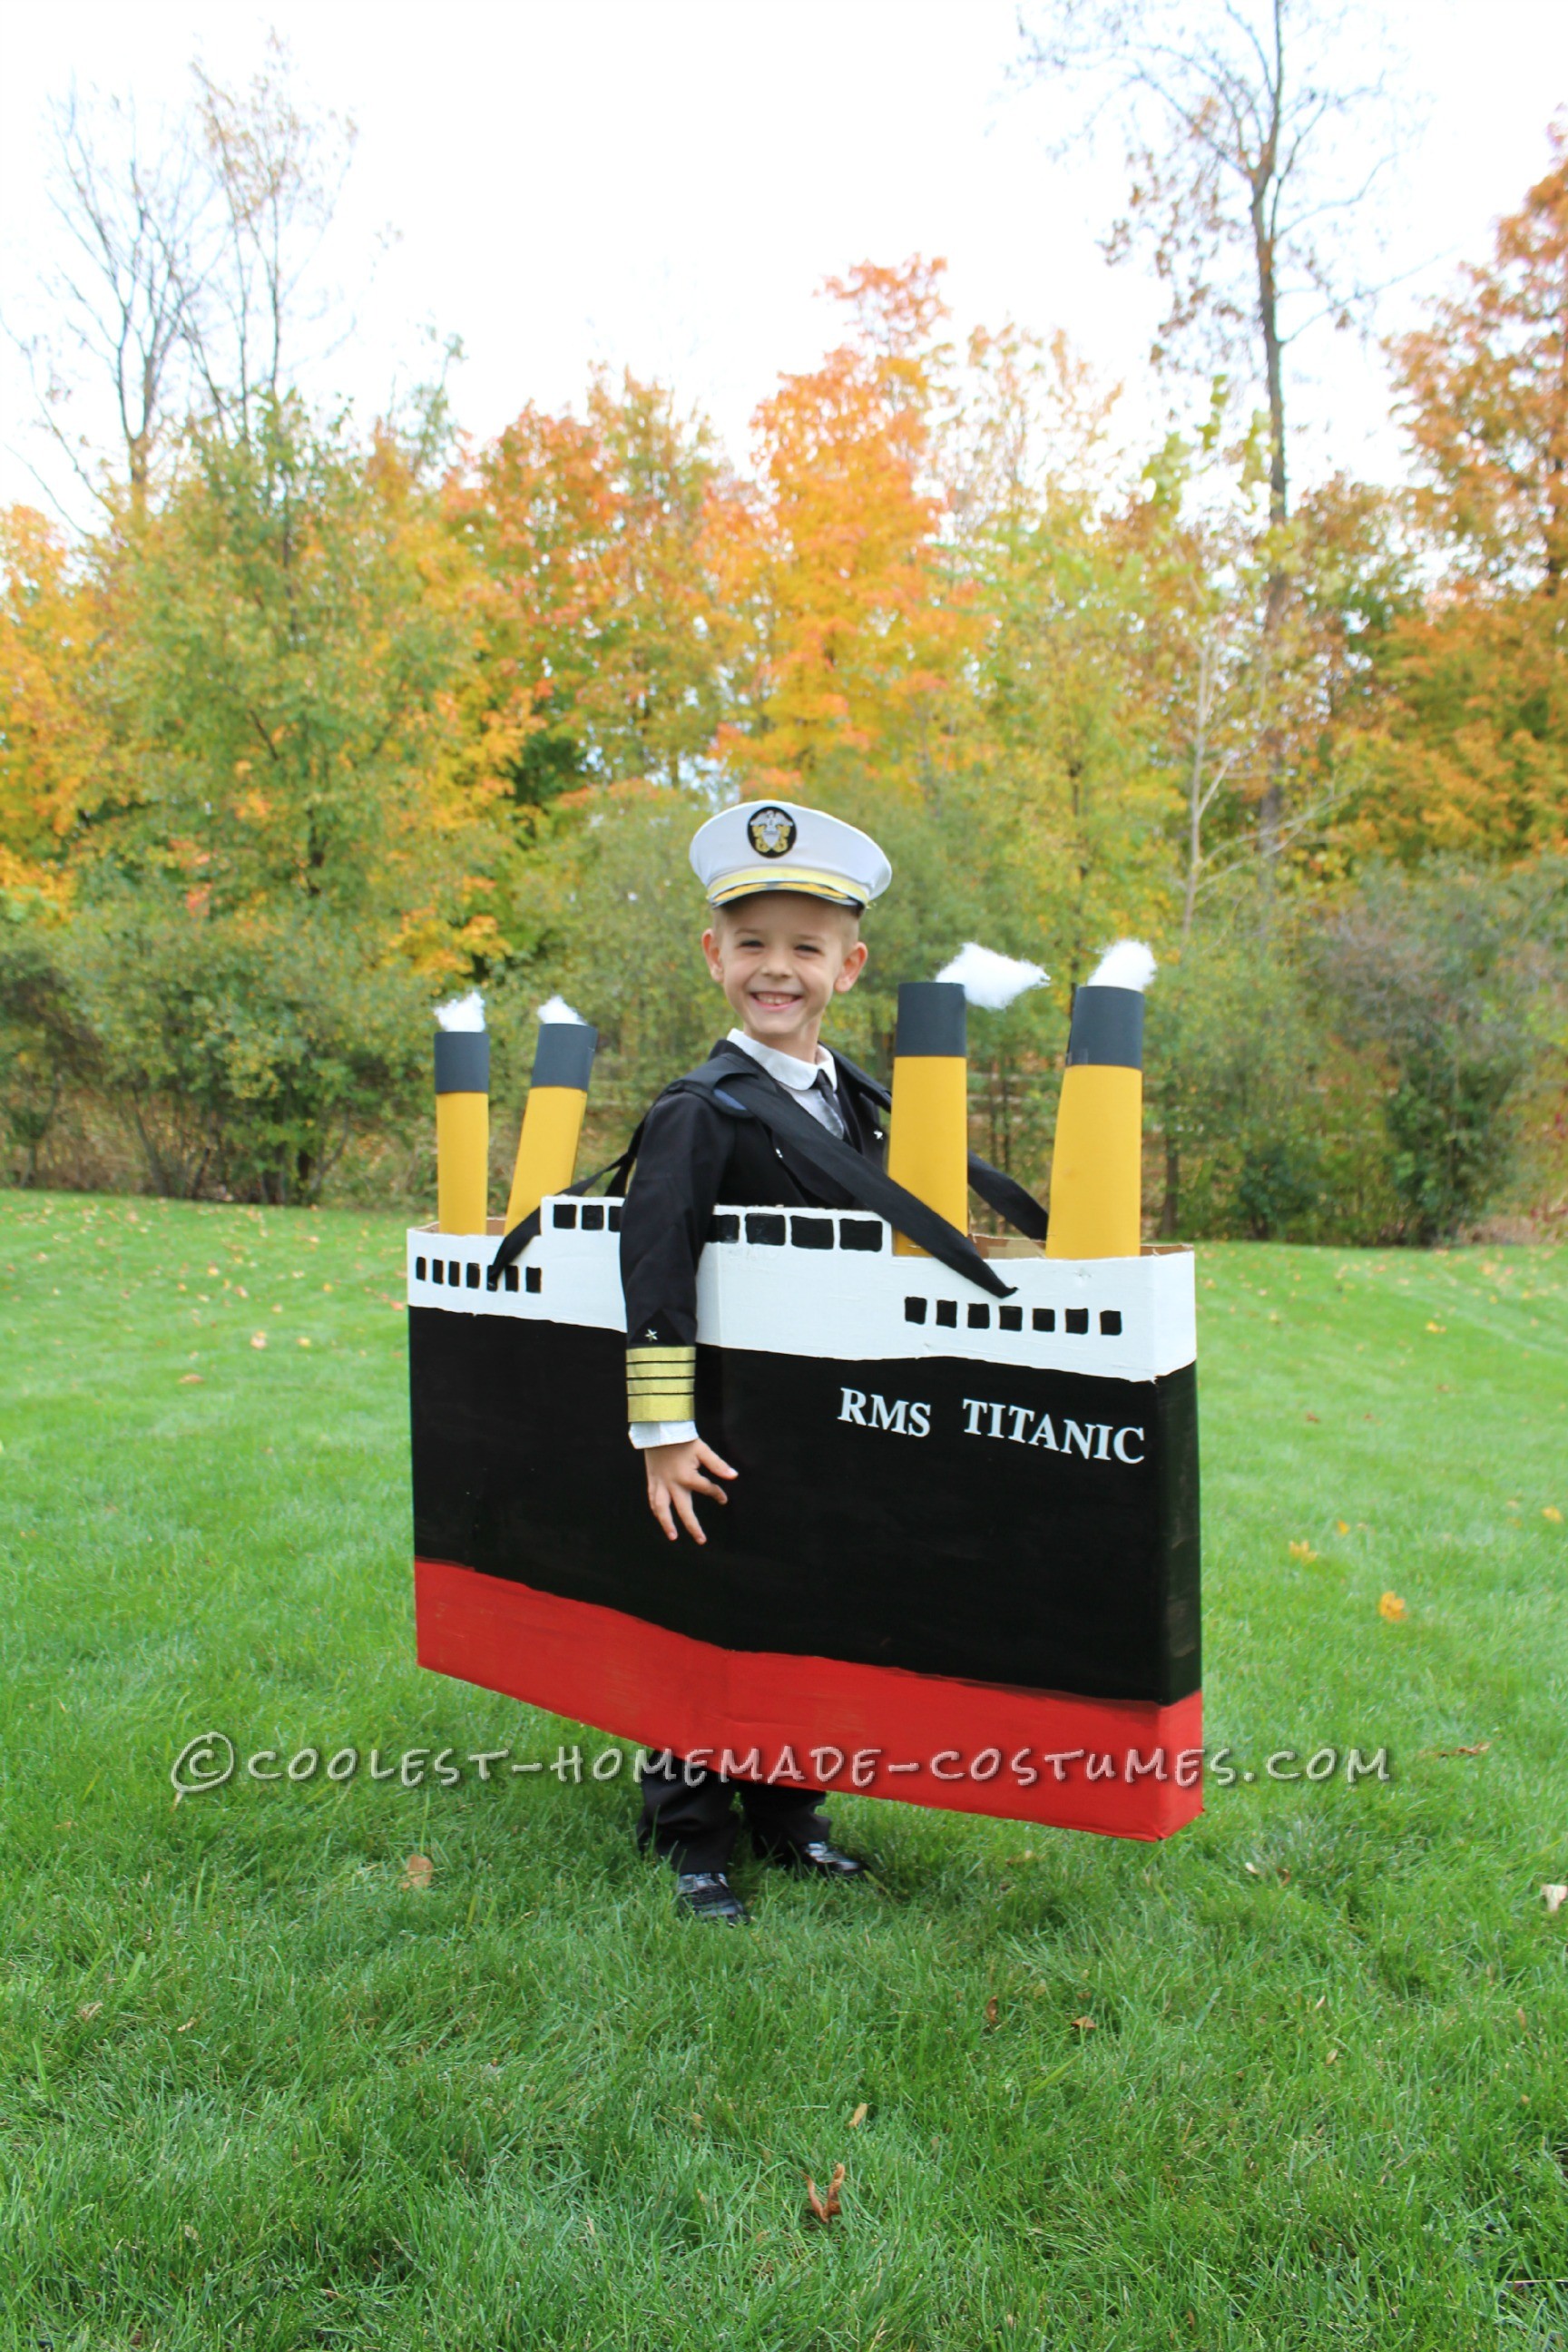 Original DIY Costume Idea for a Boy: Captain of the Titanic